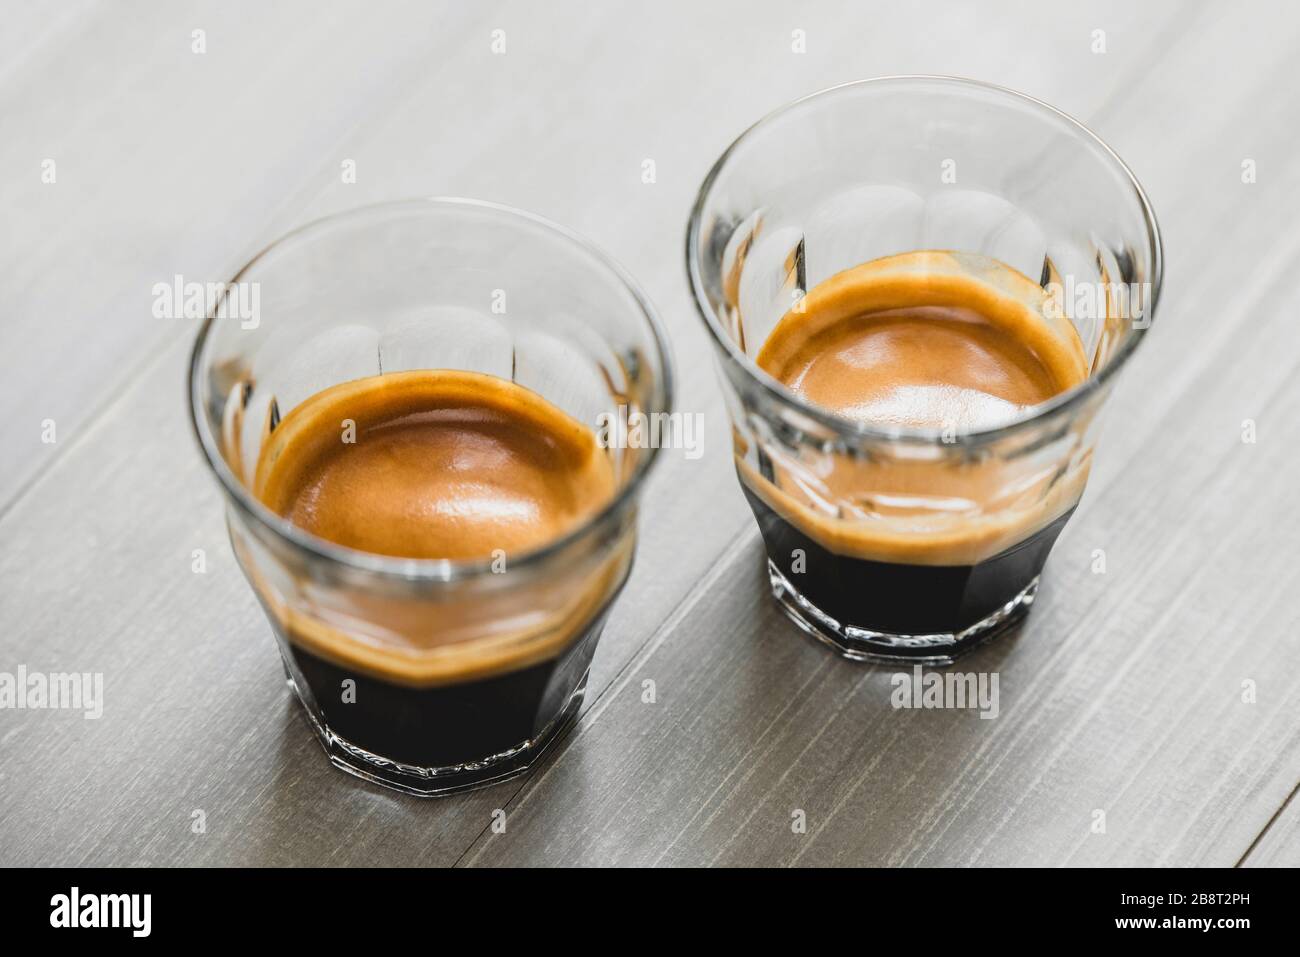 Double Espresso Shot